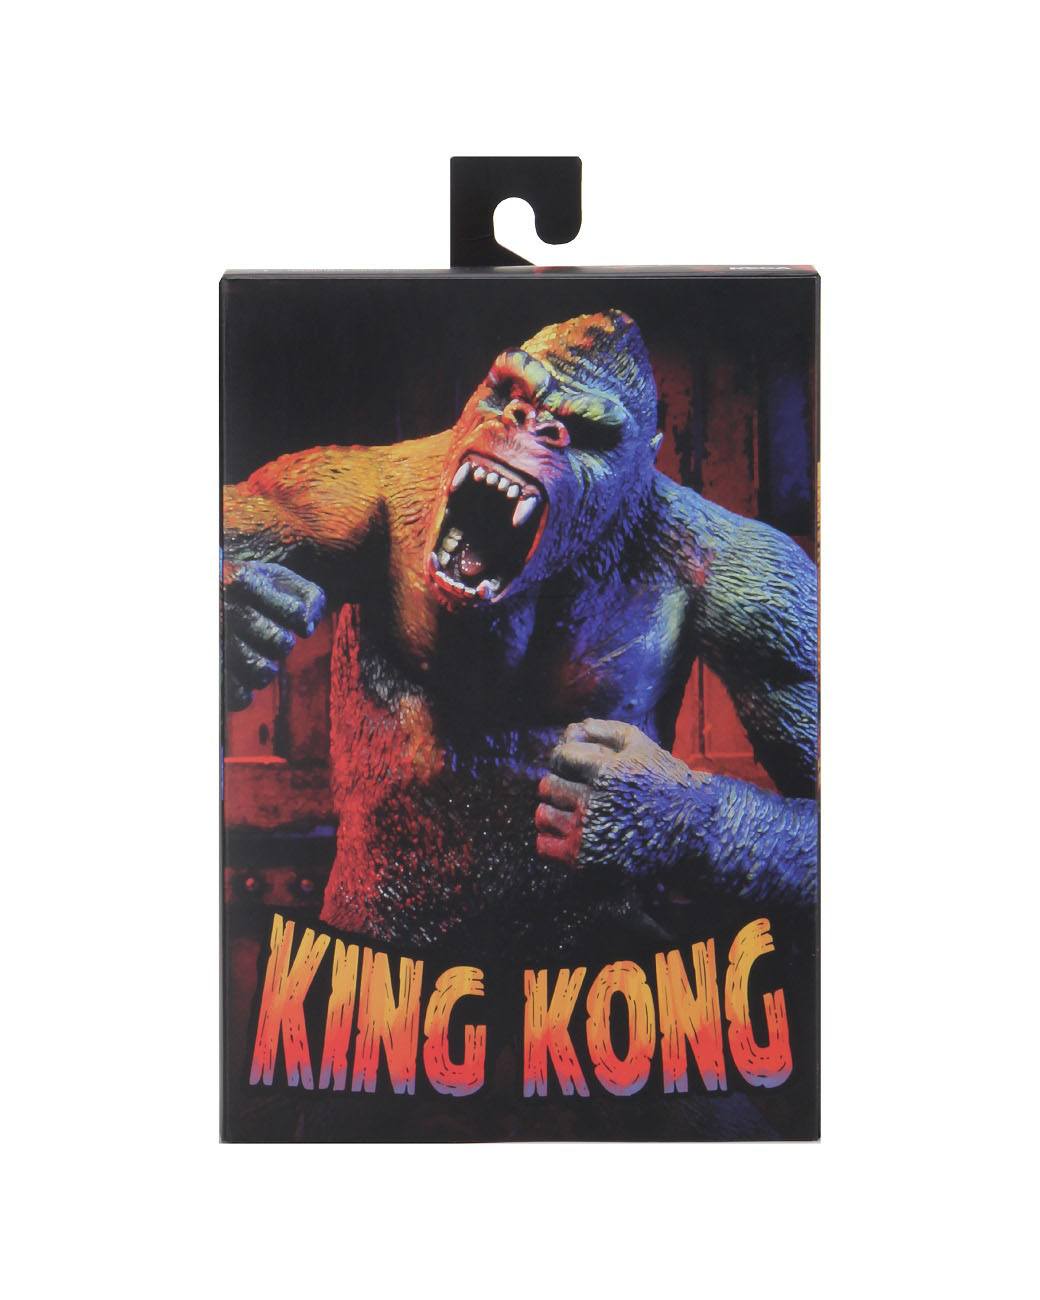 King Kong Actionfigur Ultimate King Kong (illustrated) 20 cm NECA42748 634482427484